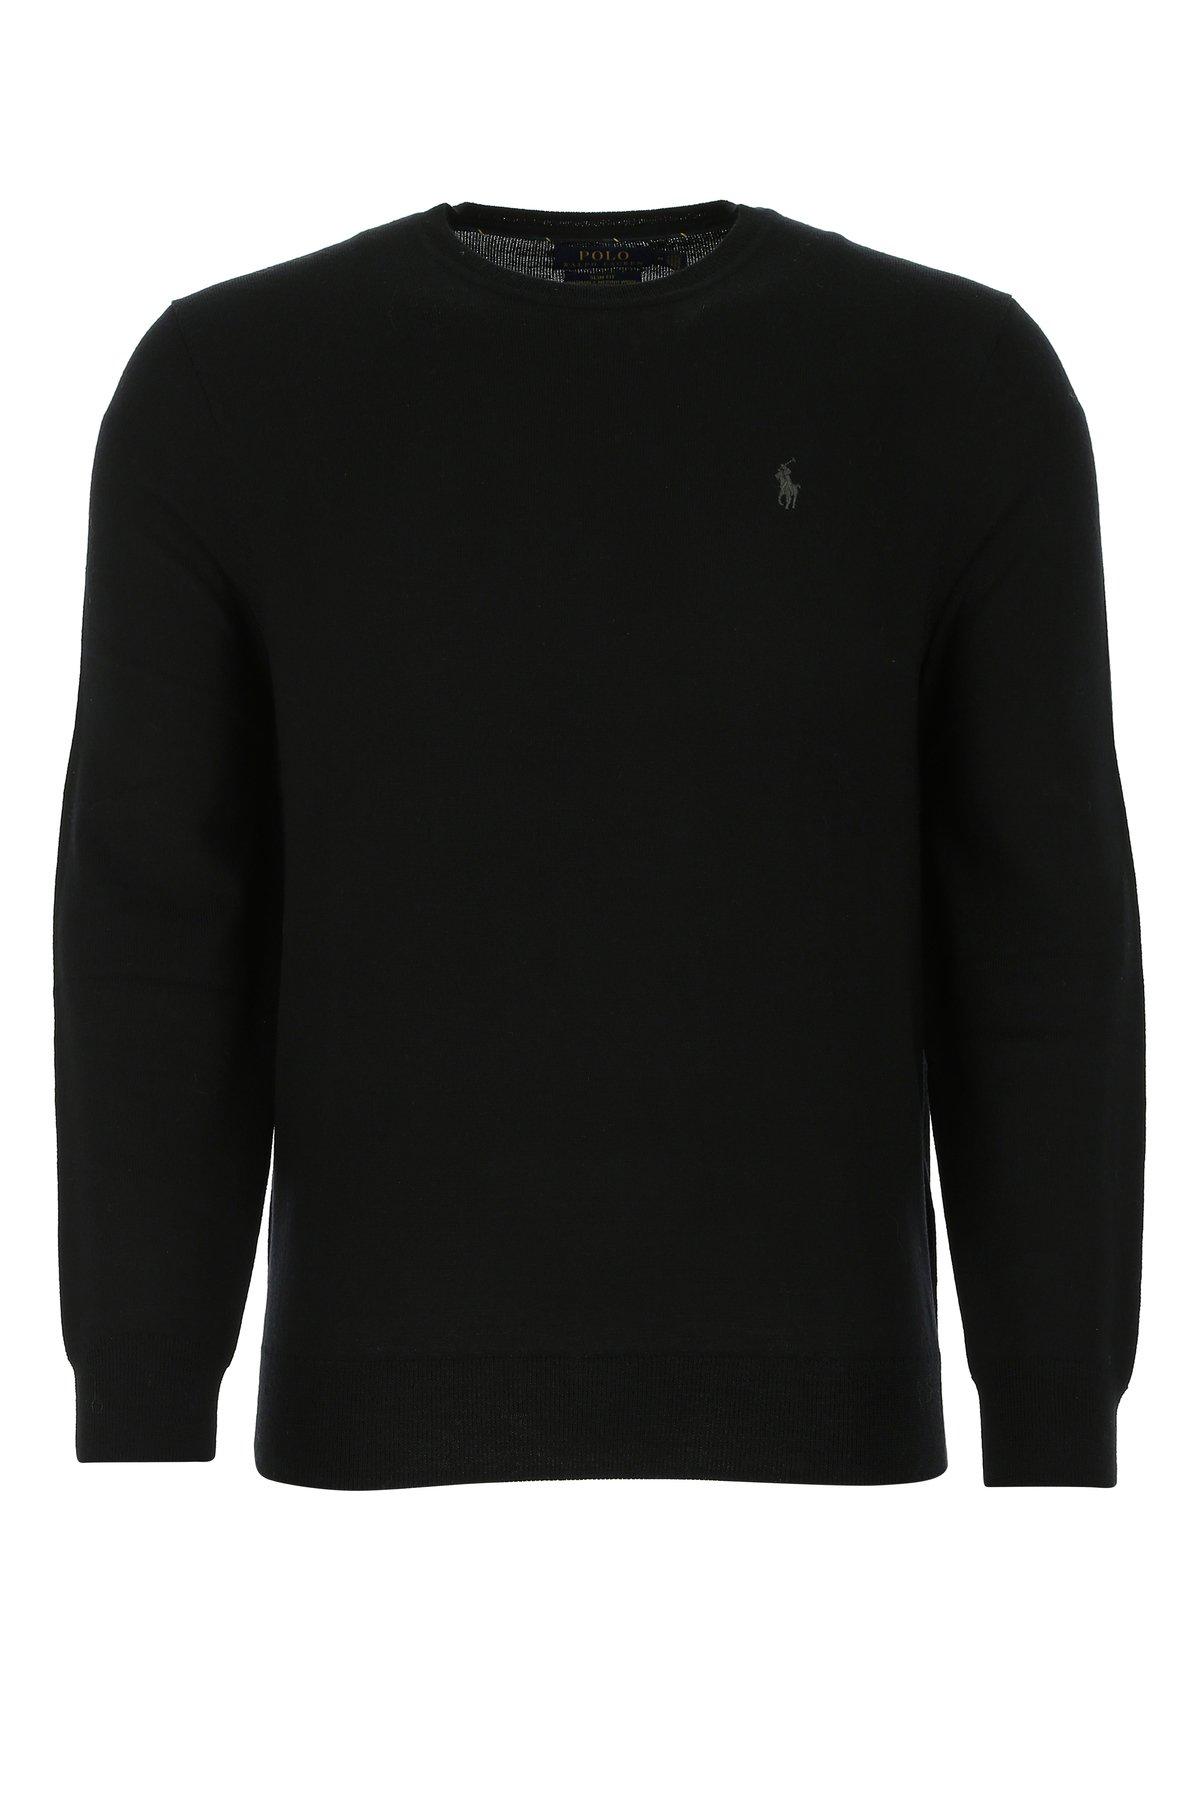 Polo Ralph Lauren Wool Logo Crewneck Sweater in Black for Men - Lyst